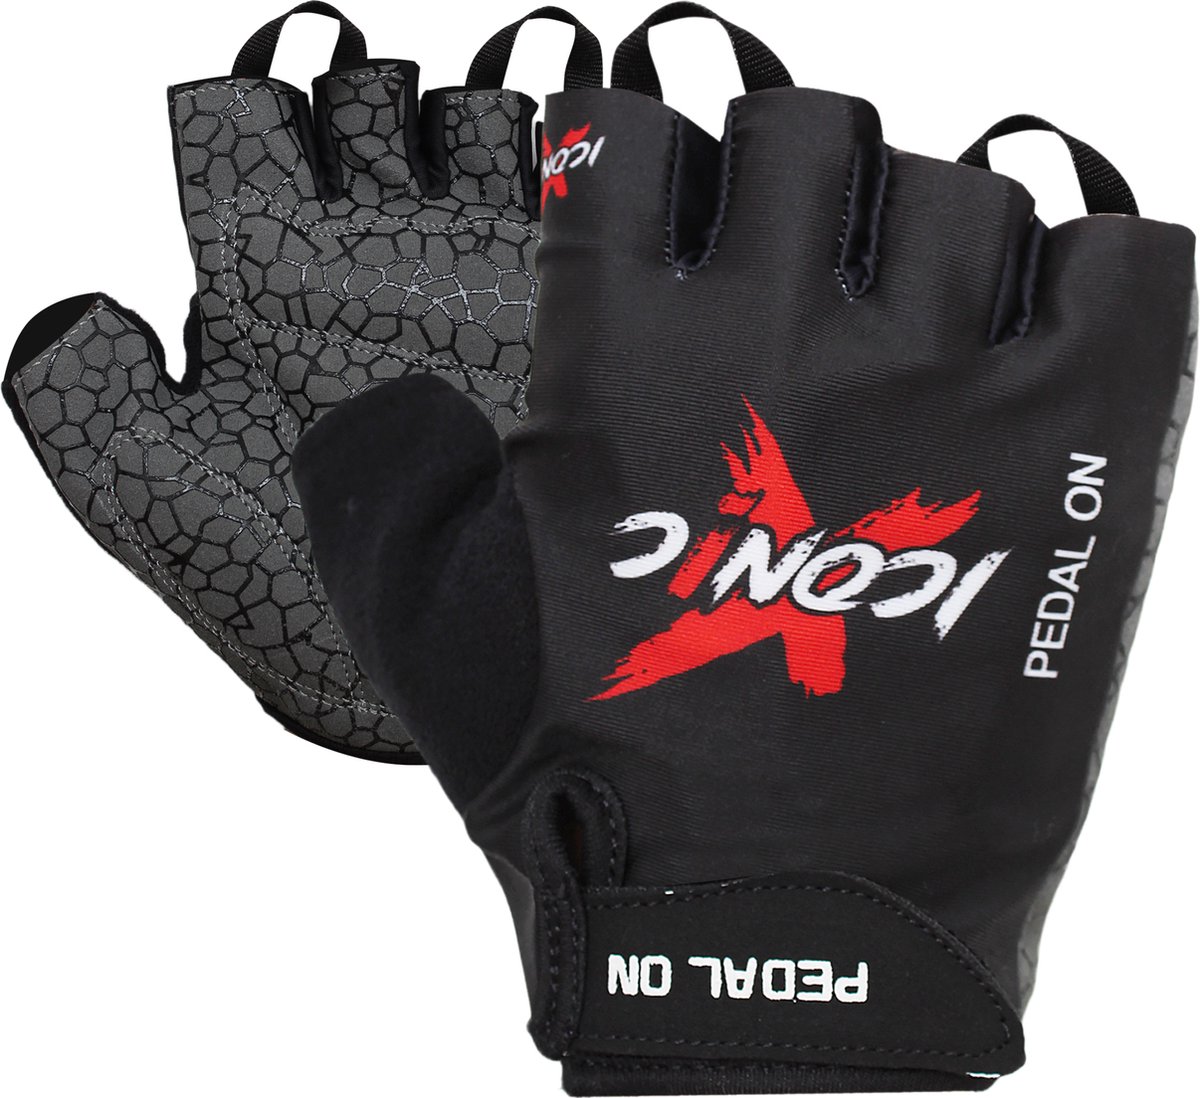 Cycling Gloves Bike Gloves Mountain Road Bike Gloves Anti-slip Shock-absorbing Pad Breathable Half Finger Bicycle Biking Gloves for Men & Women